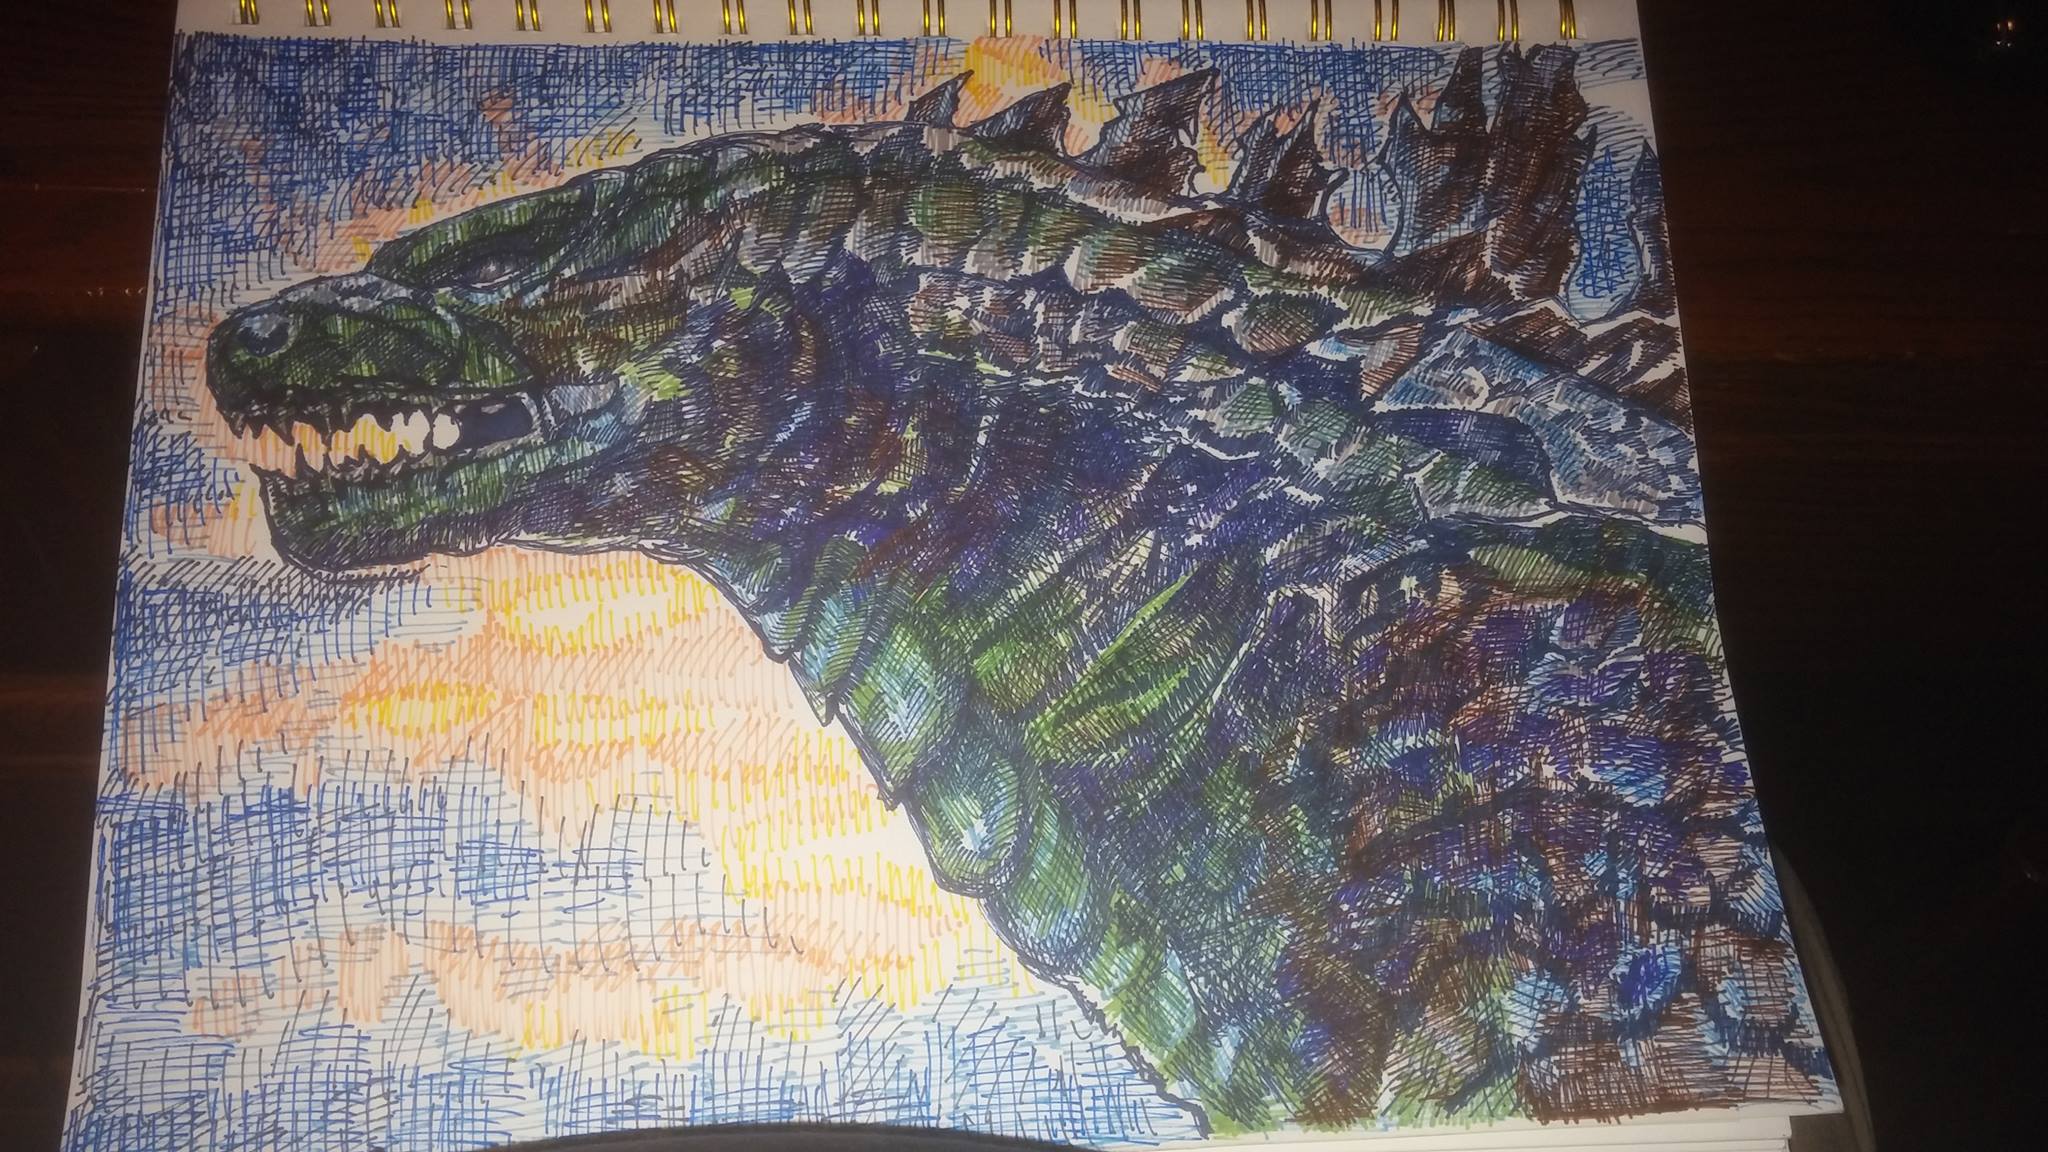 Godzilla by Firiel